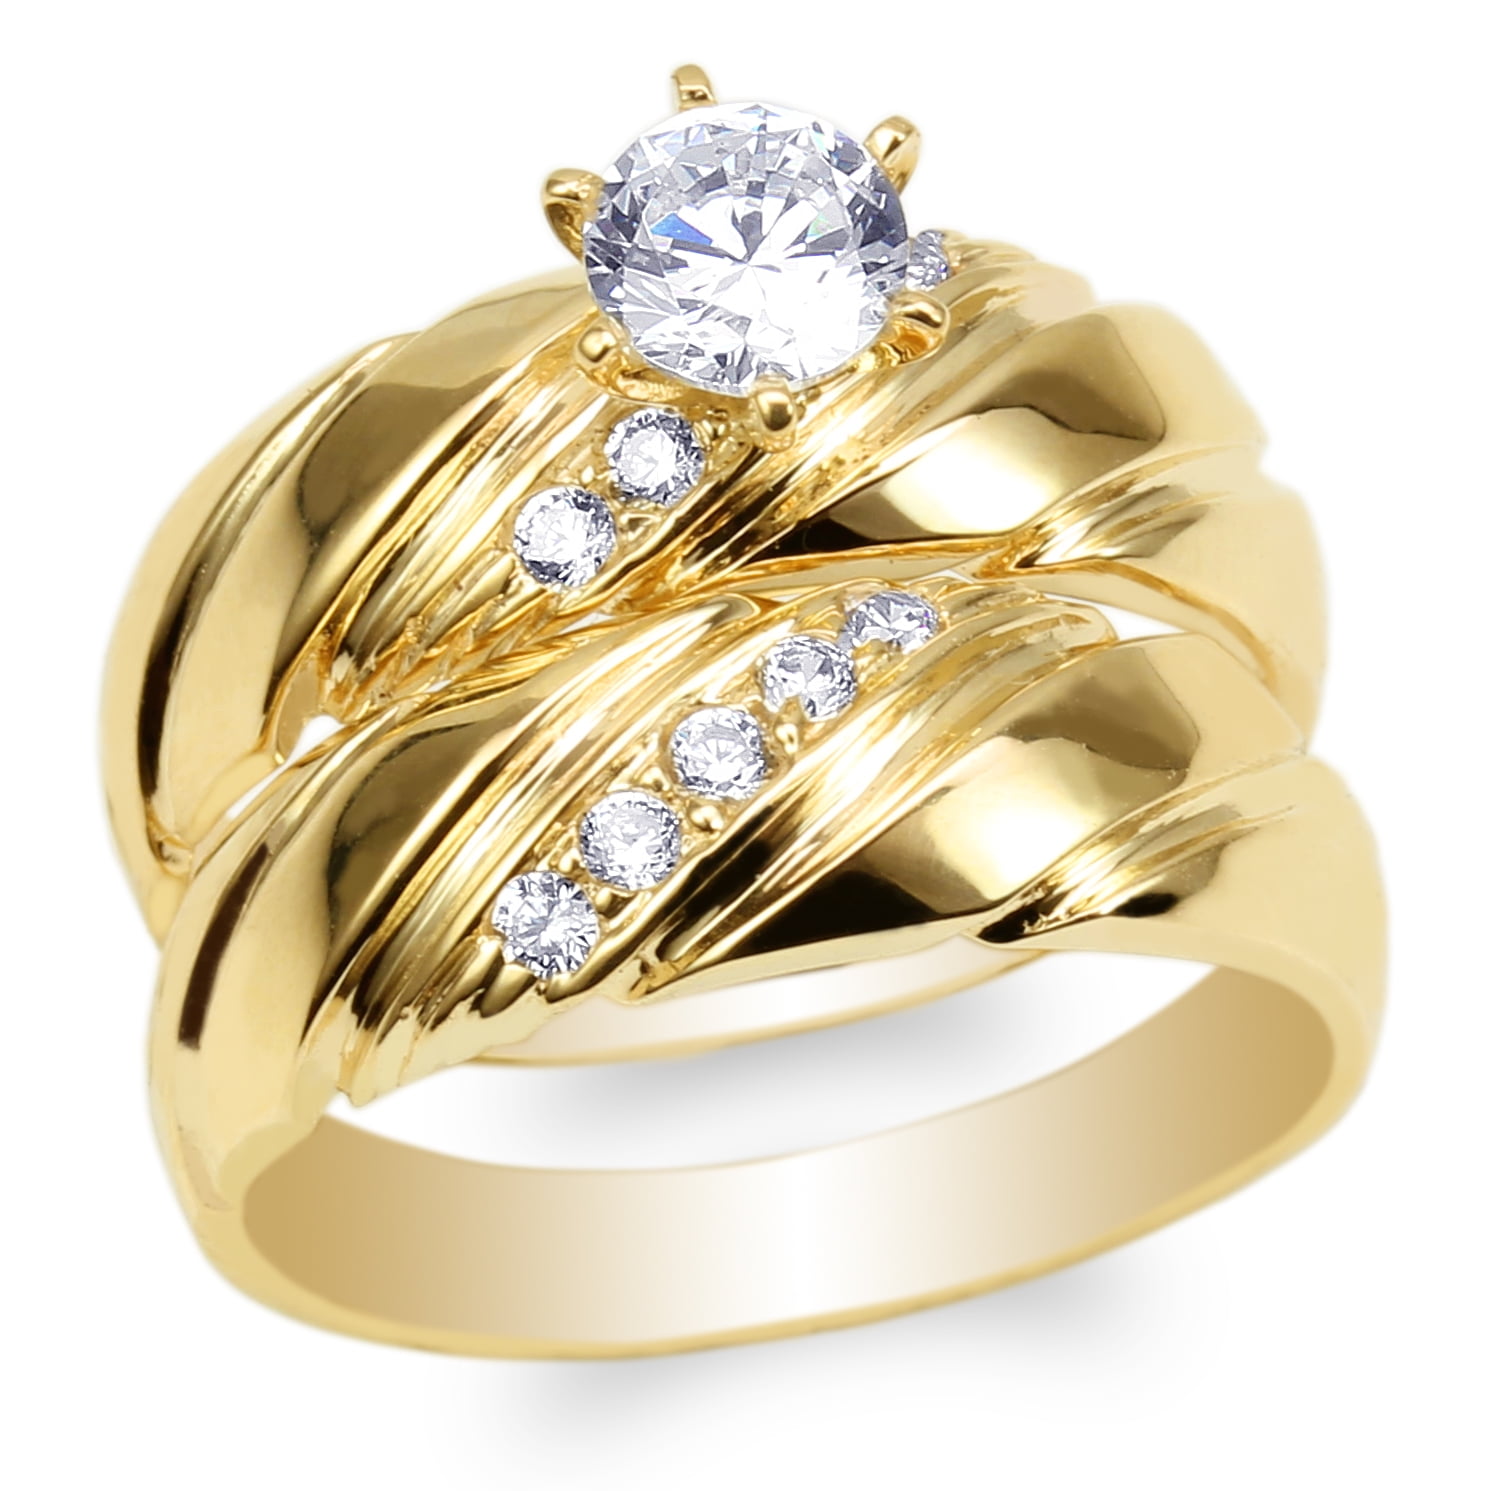 Womens 10K Yellow Gold Round CZ Luxury Engagement Wedding Band Ring Size 4-10 